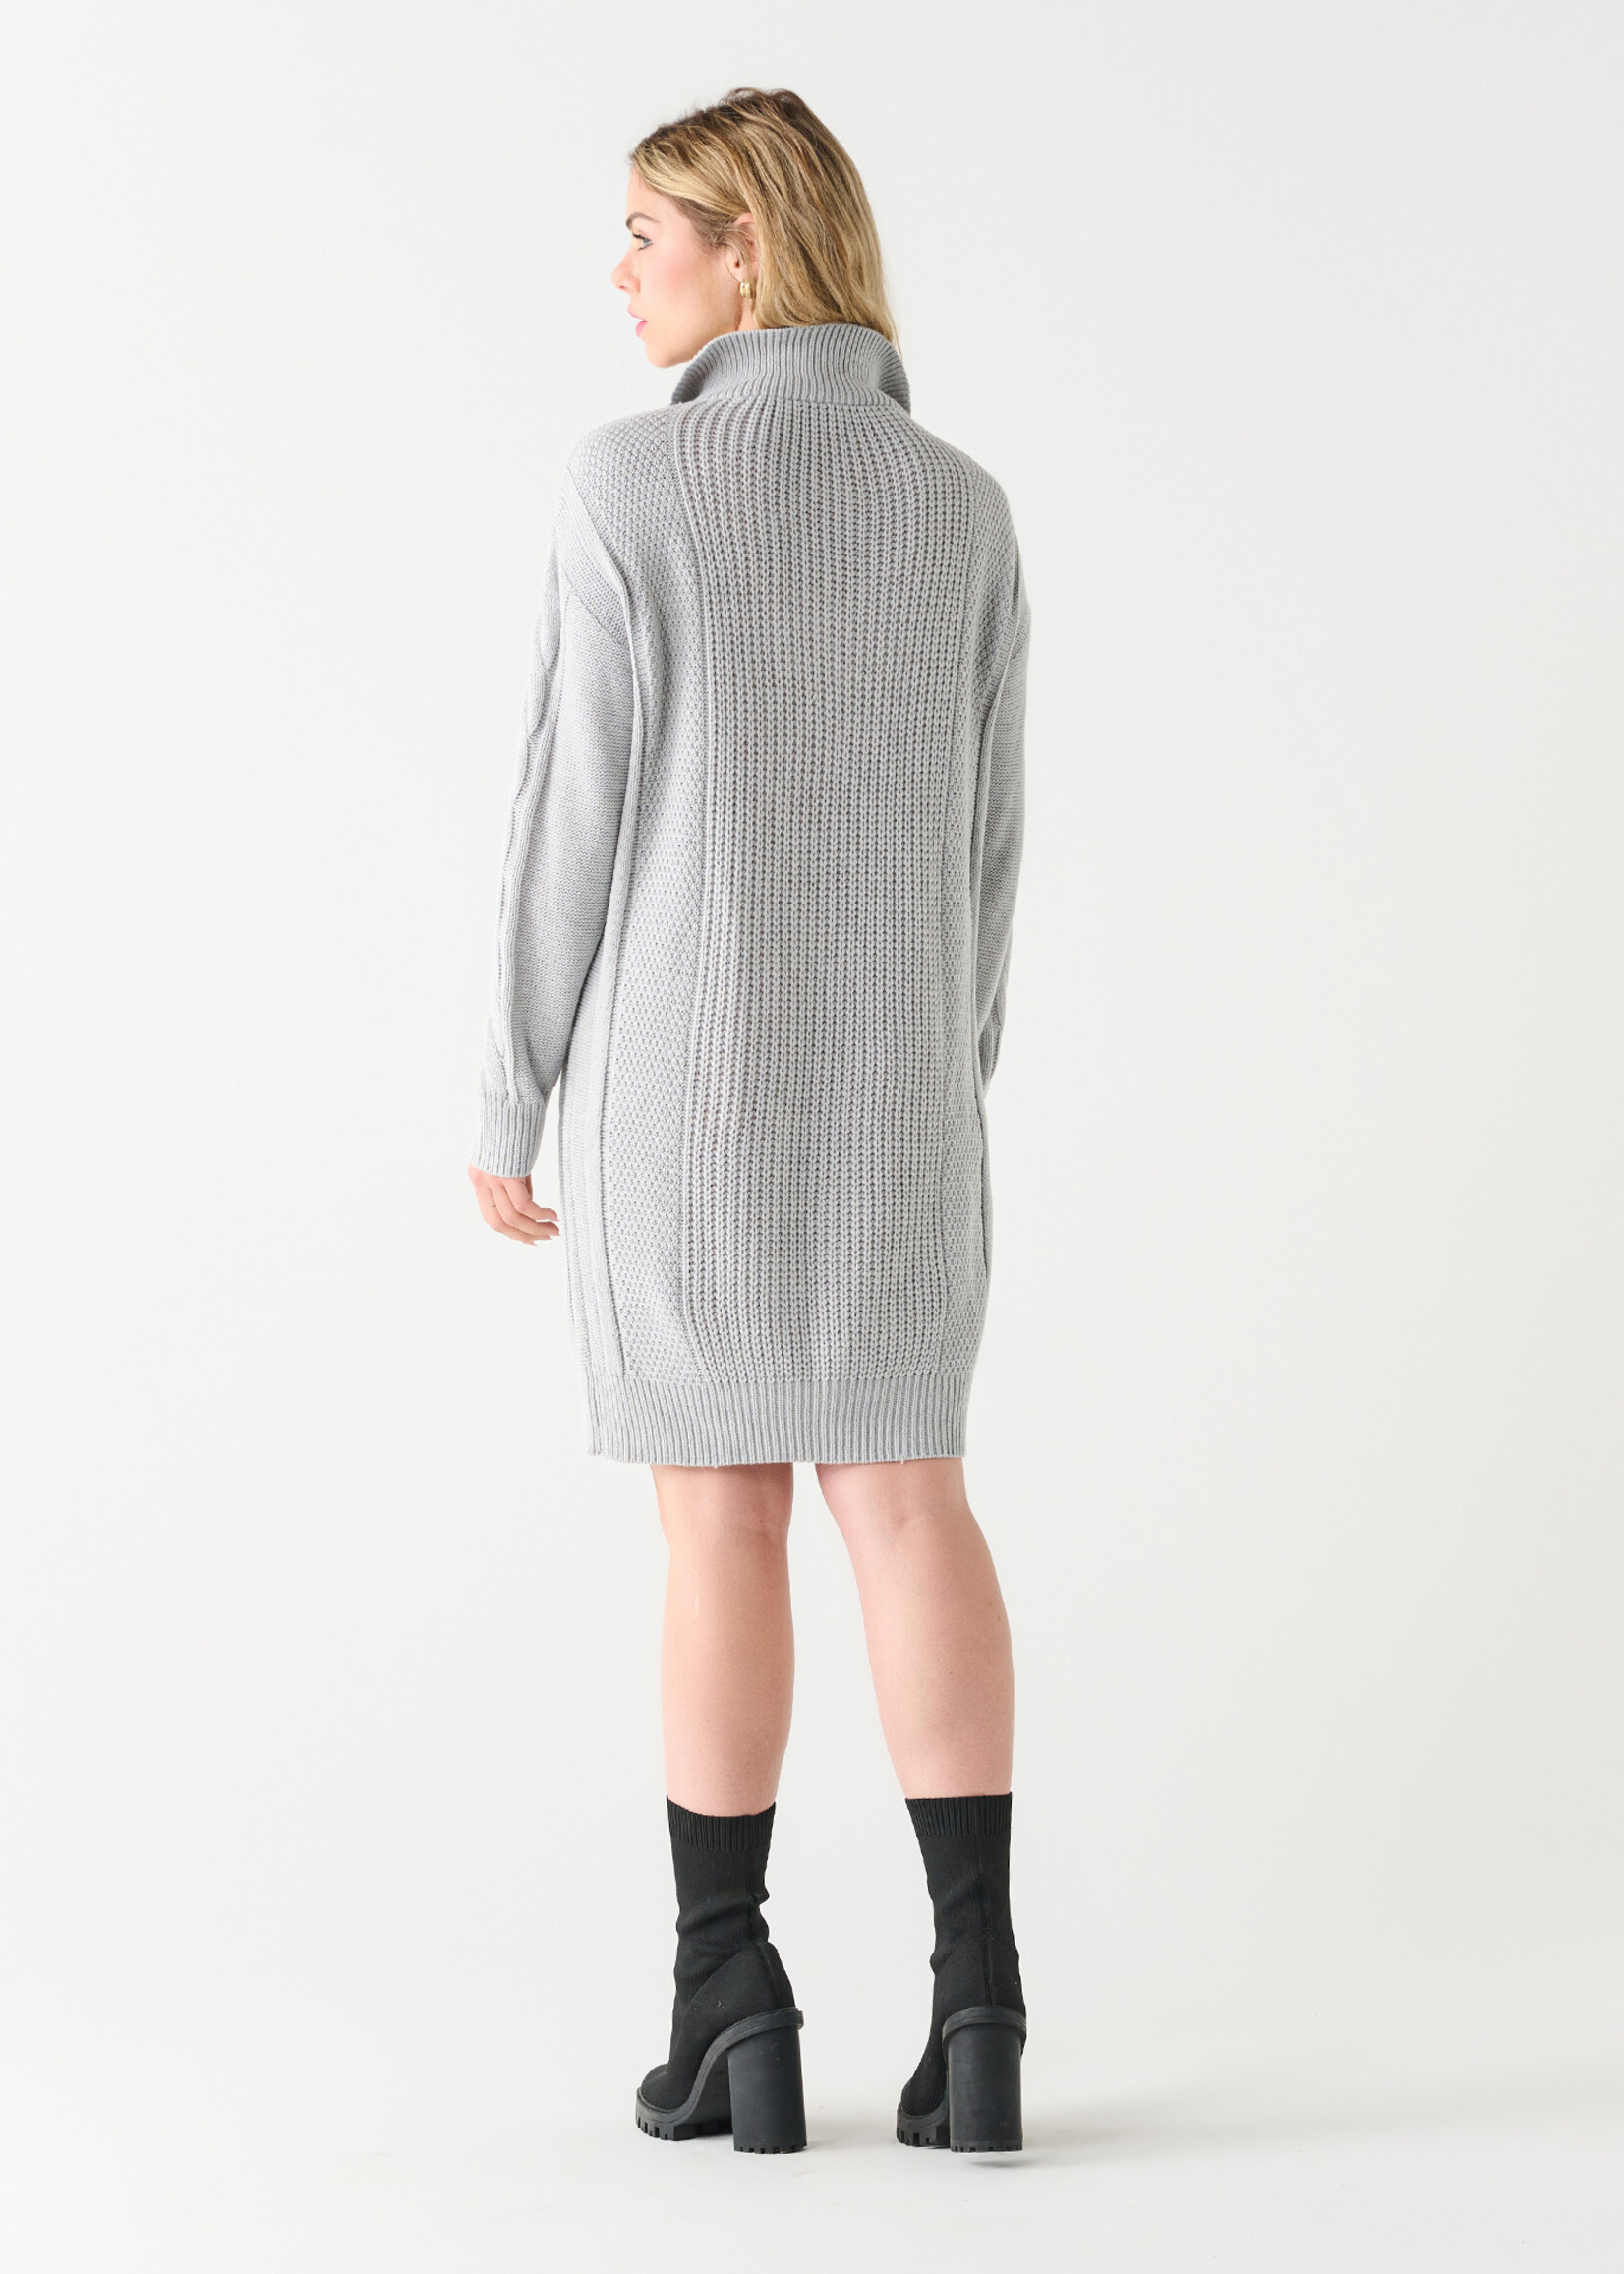 Dex Clothing Flat Collar Zip Front Sweater Dress